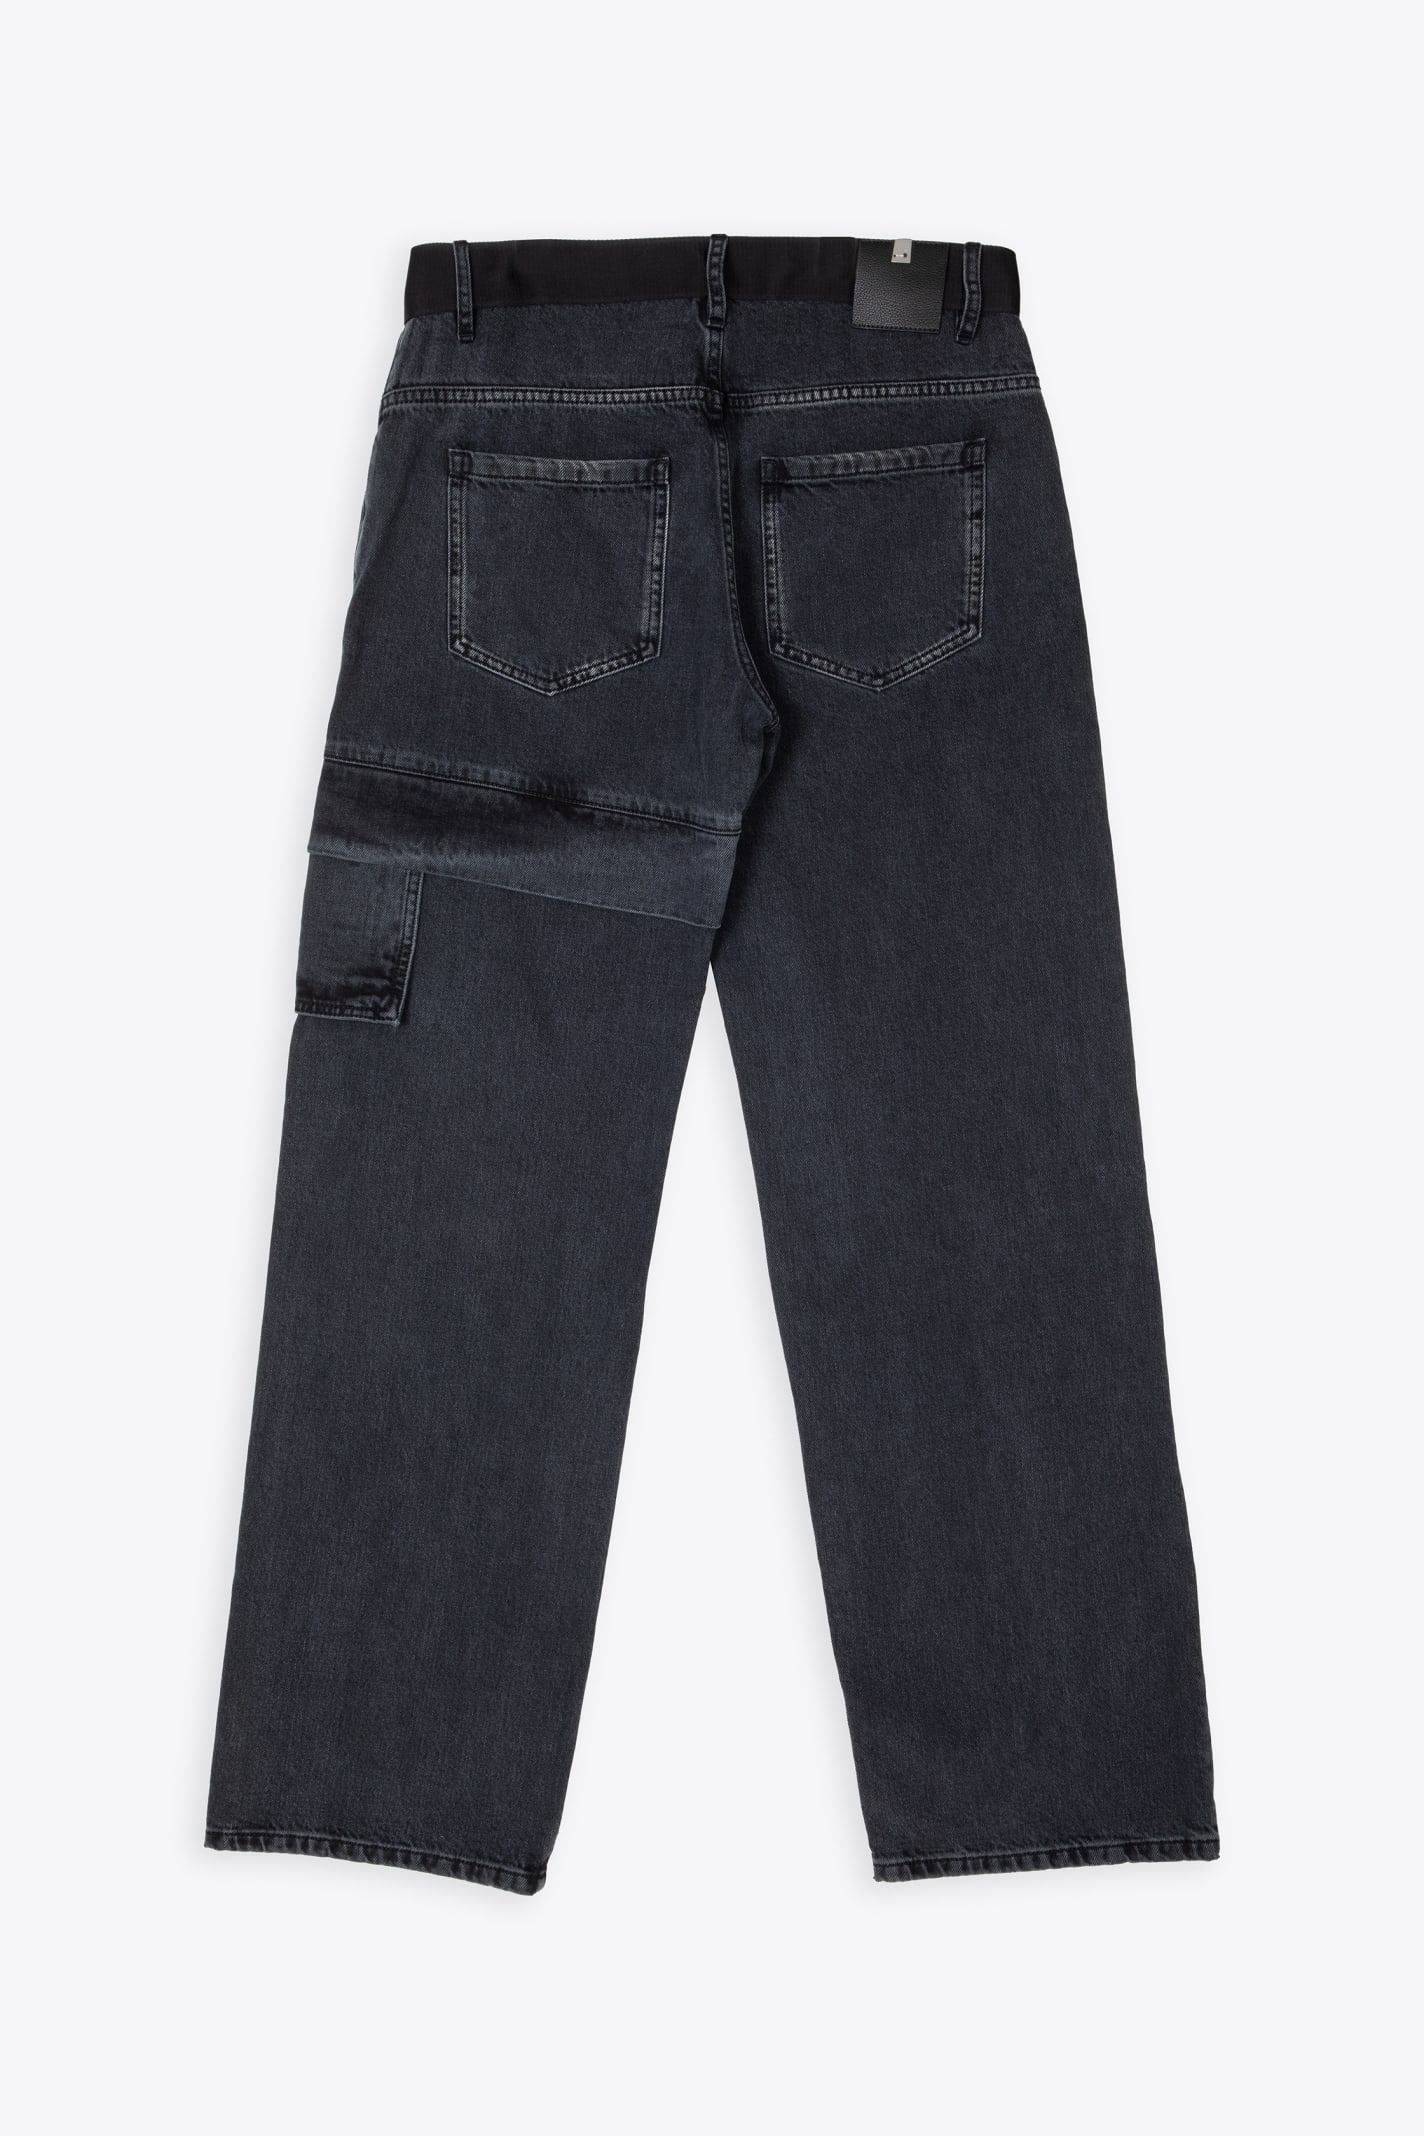 Alyx Jeans Oversized Cargo In Black | ModeSens